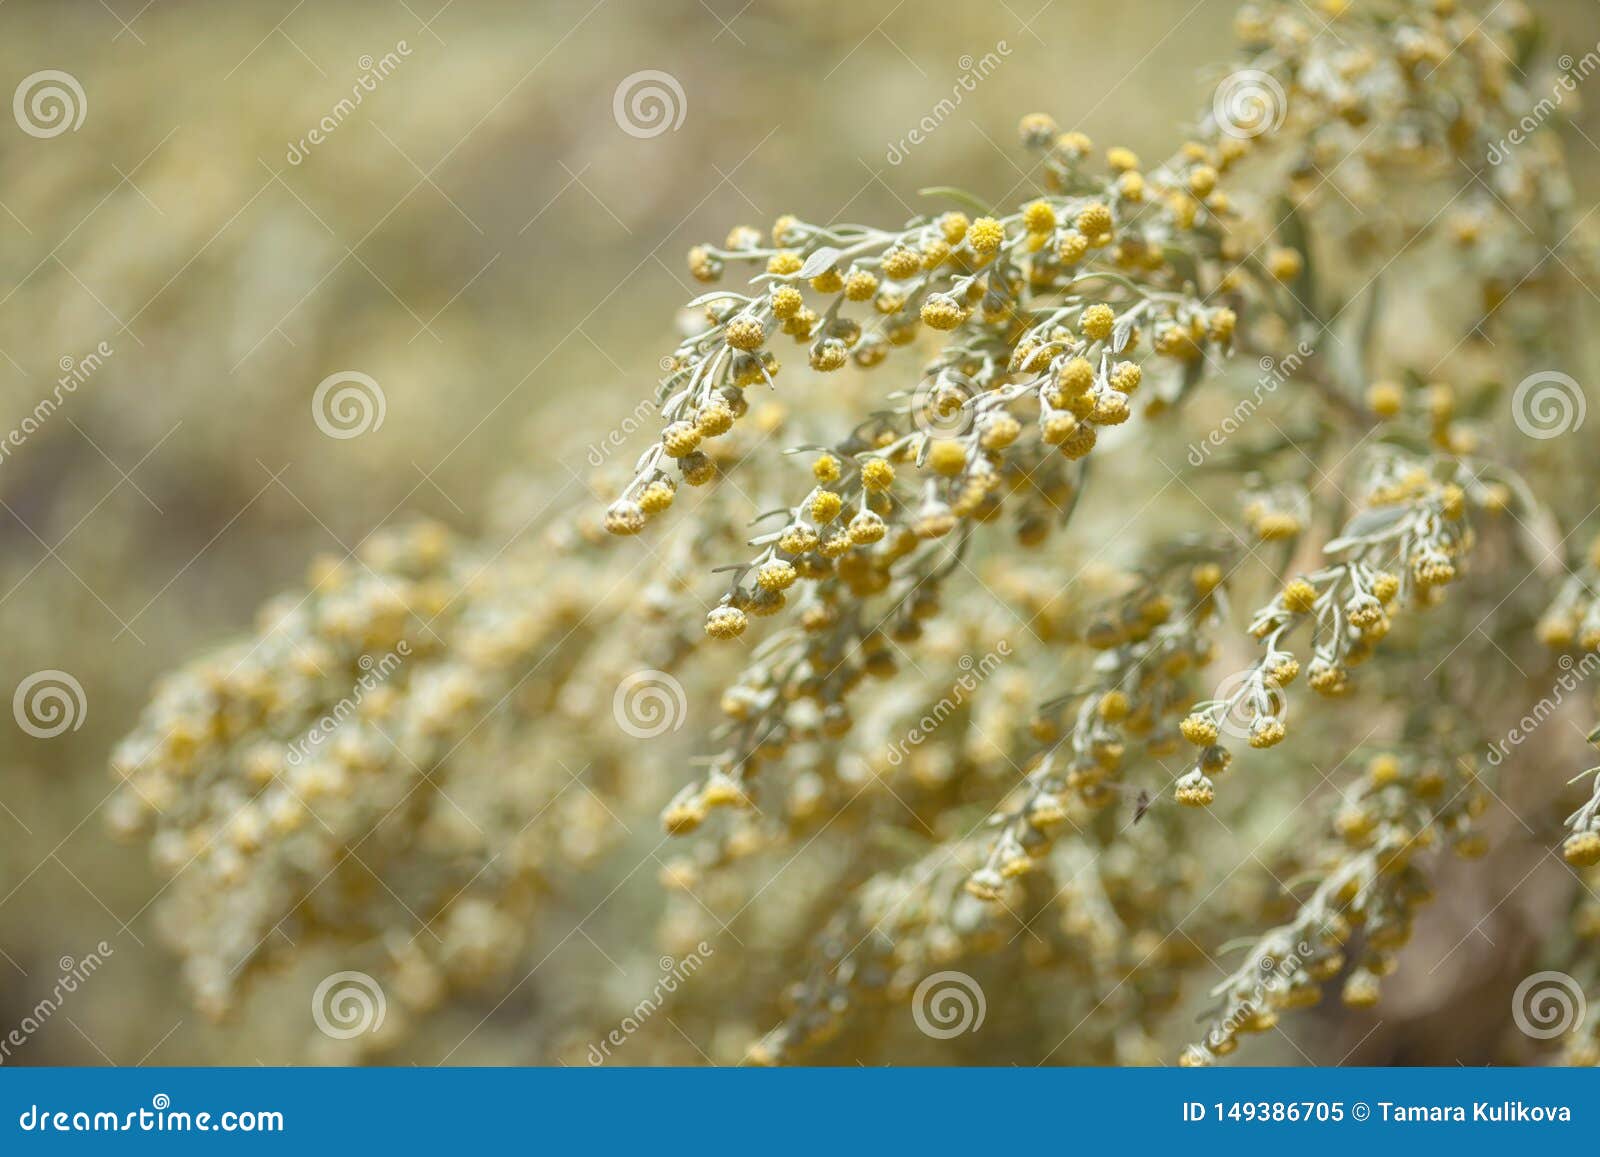 .flora of gran canaria - artemisia thuscula